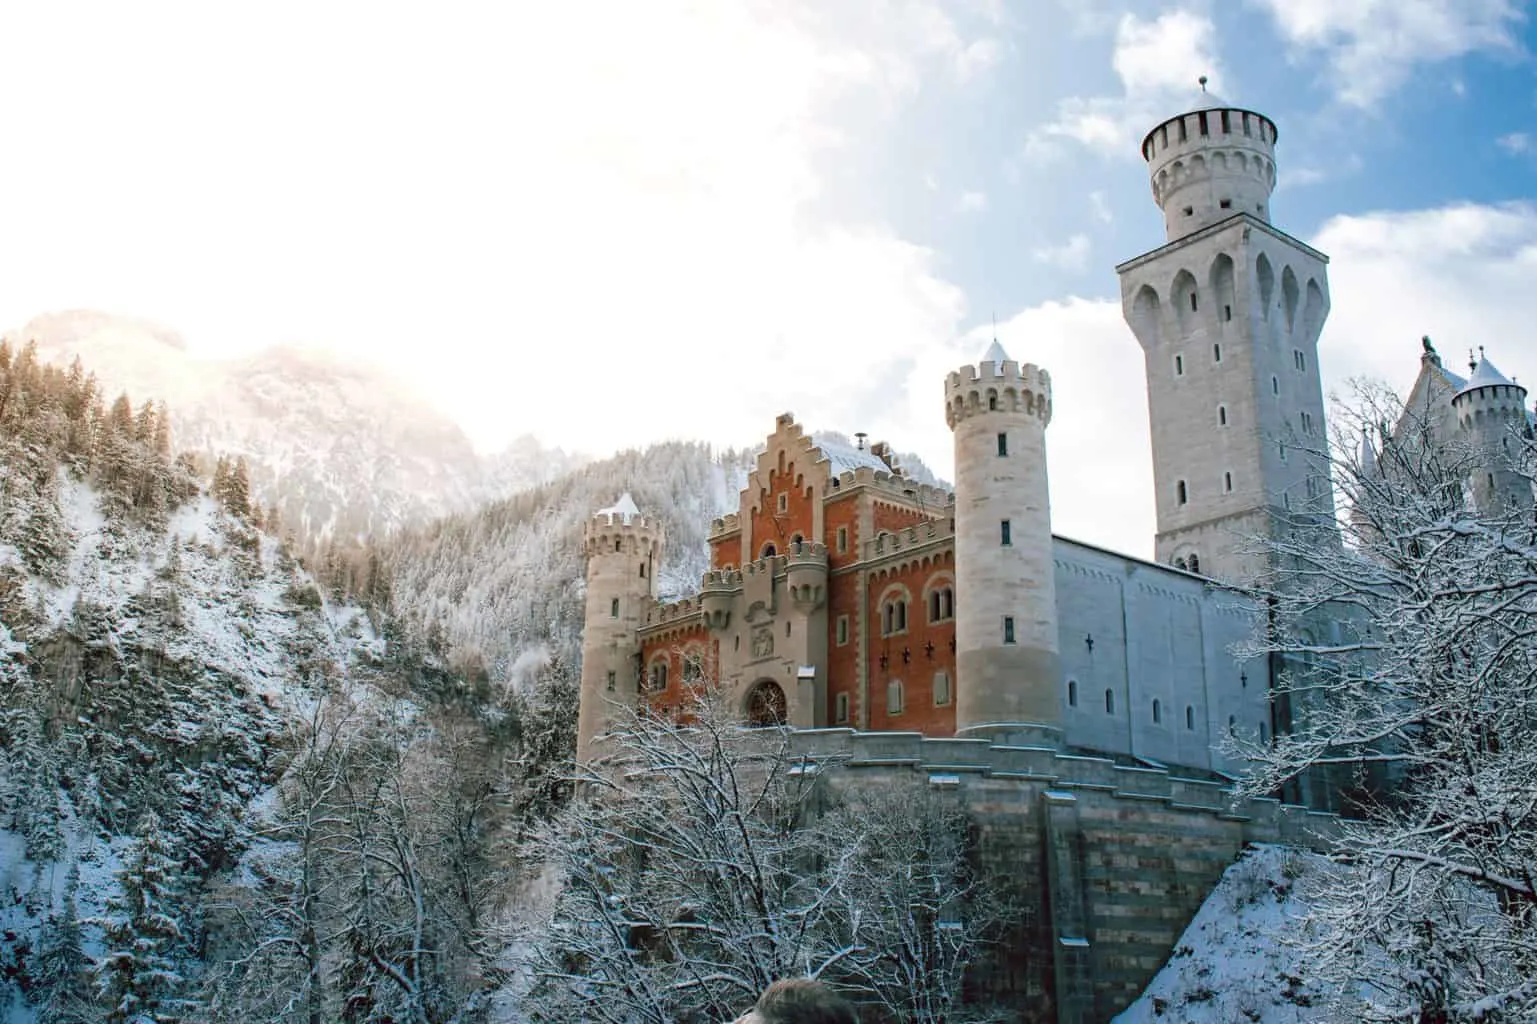 Neuschwanstein Castle surrounded by snow near Fussen, Germany. 